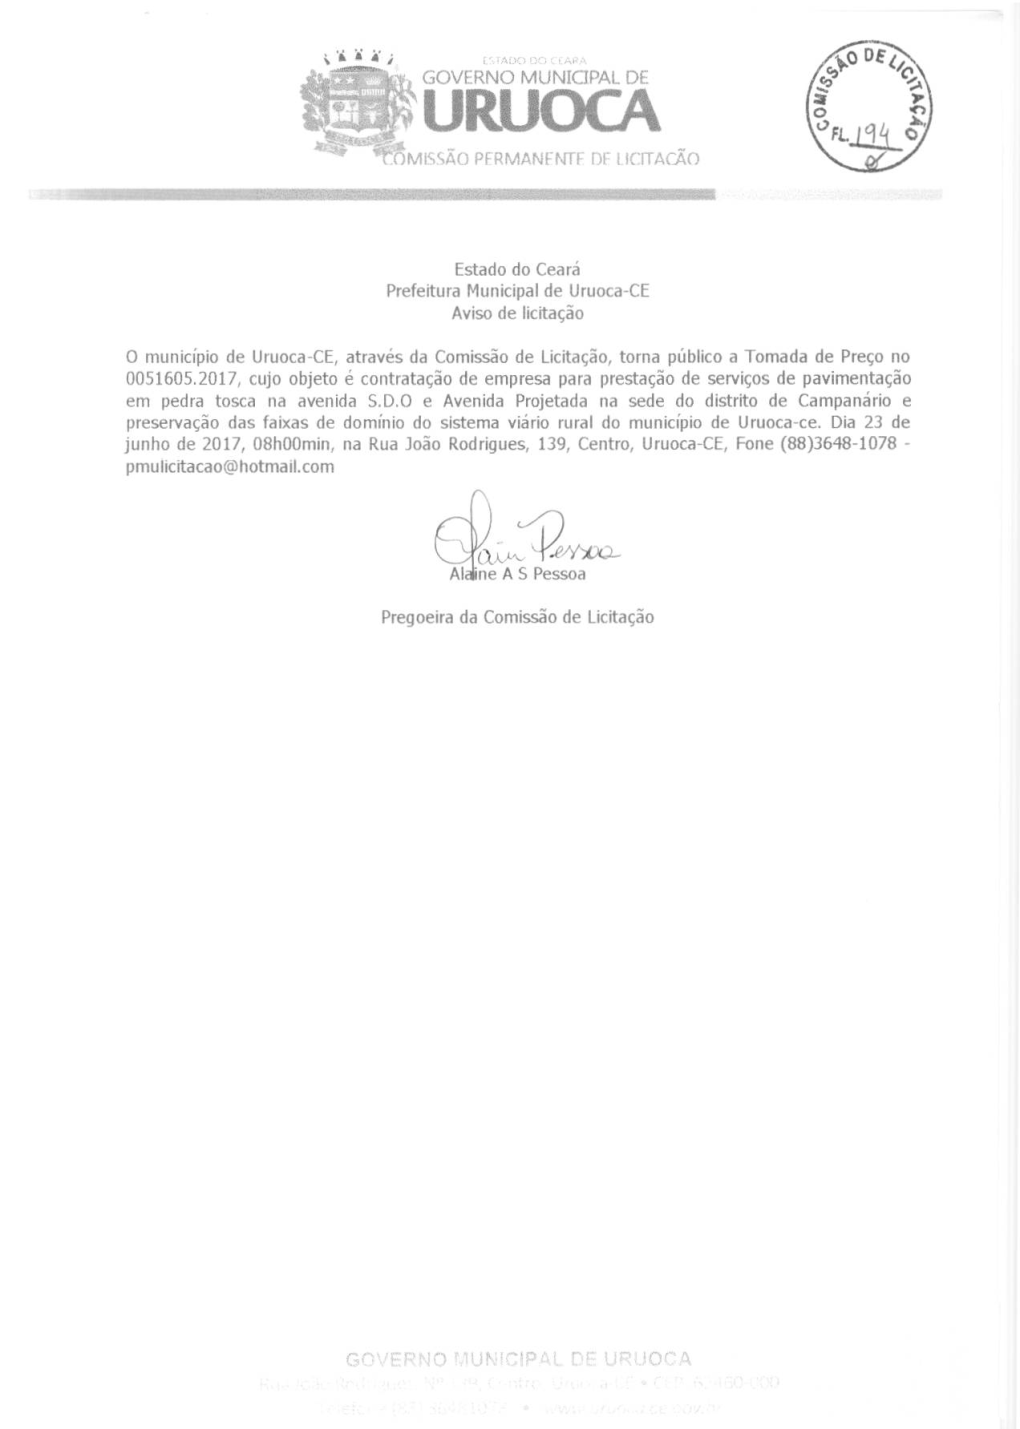 GOVERNO MUNICIPAL DE URUOCA Vromissa- 0 PERMANFUTF DF LICITACAO